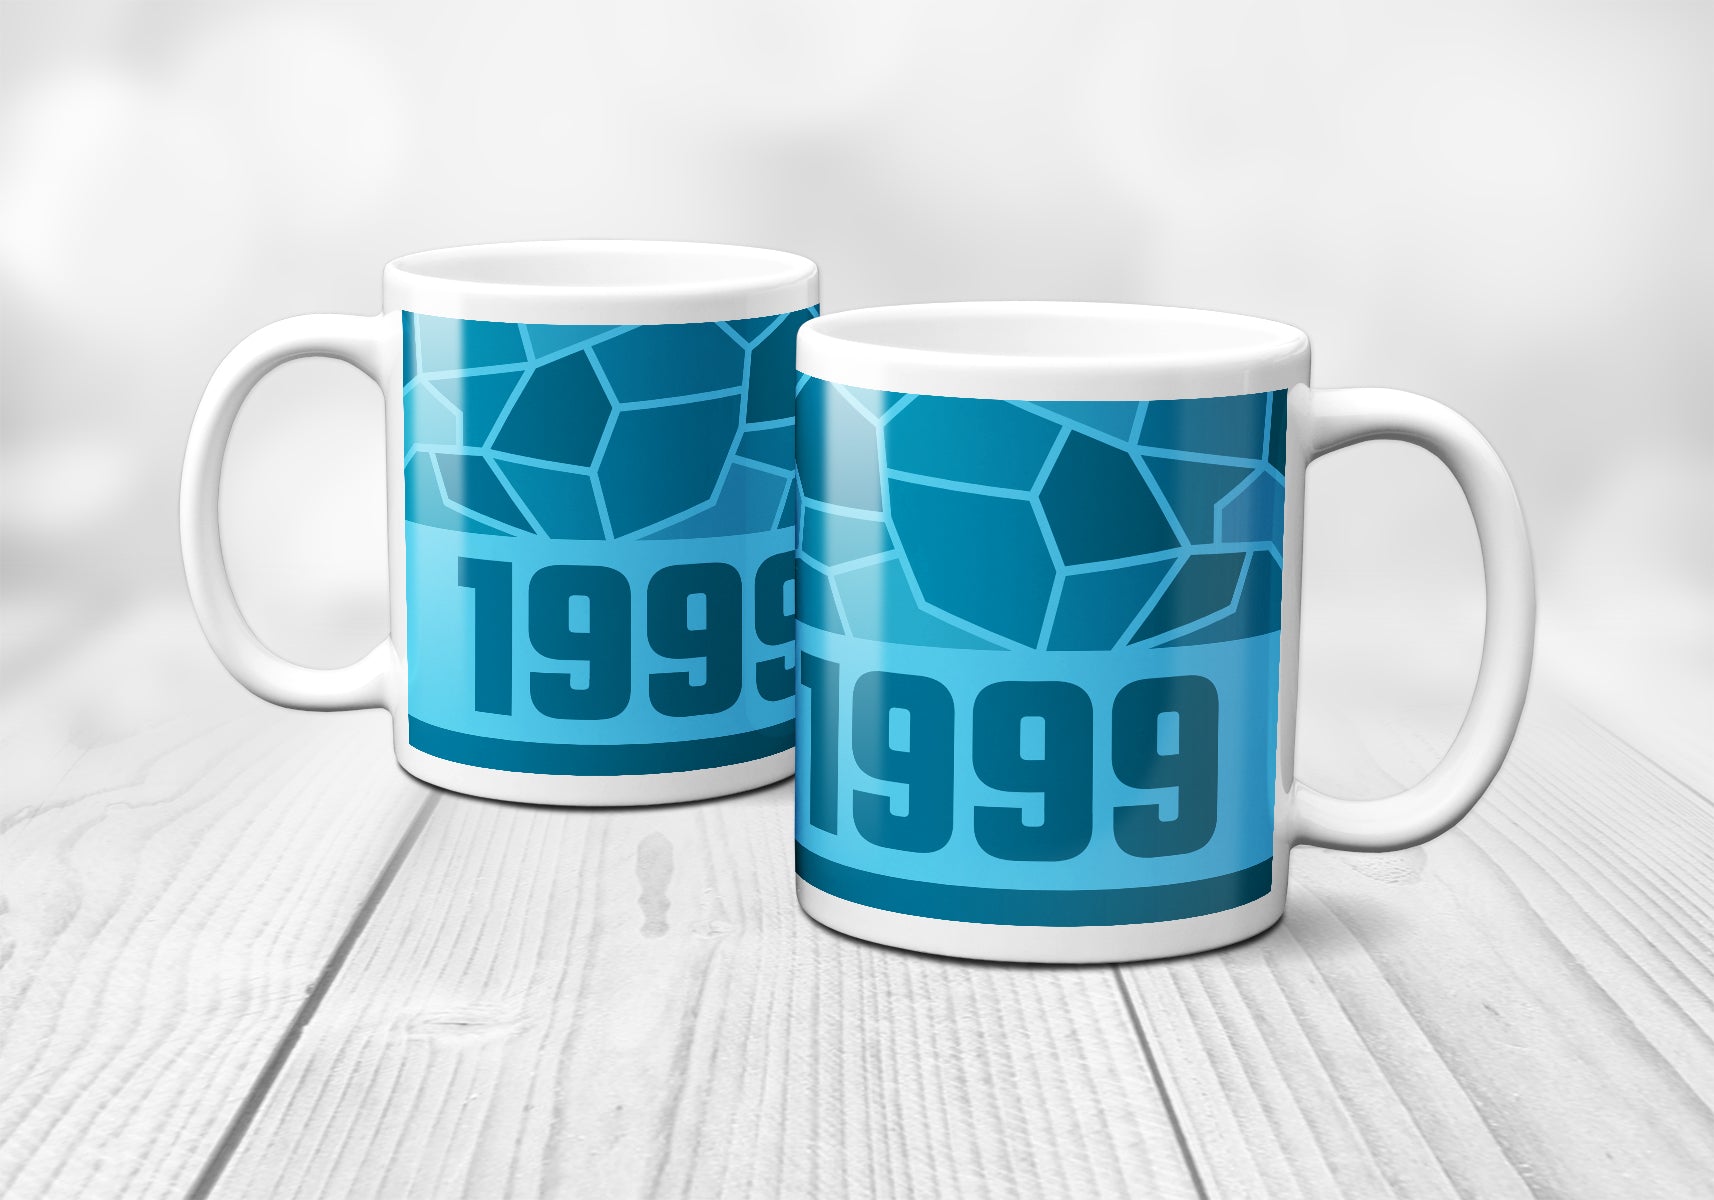 1999 Year Mug (11oz, Sky Blue)